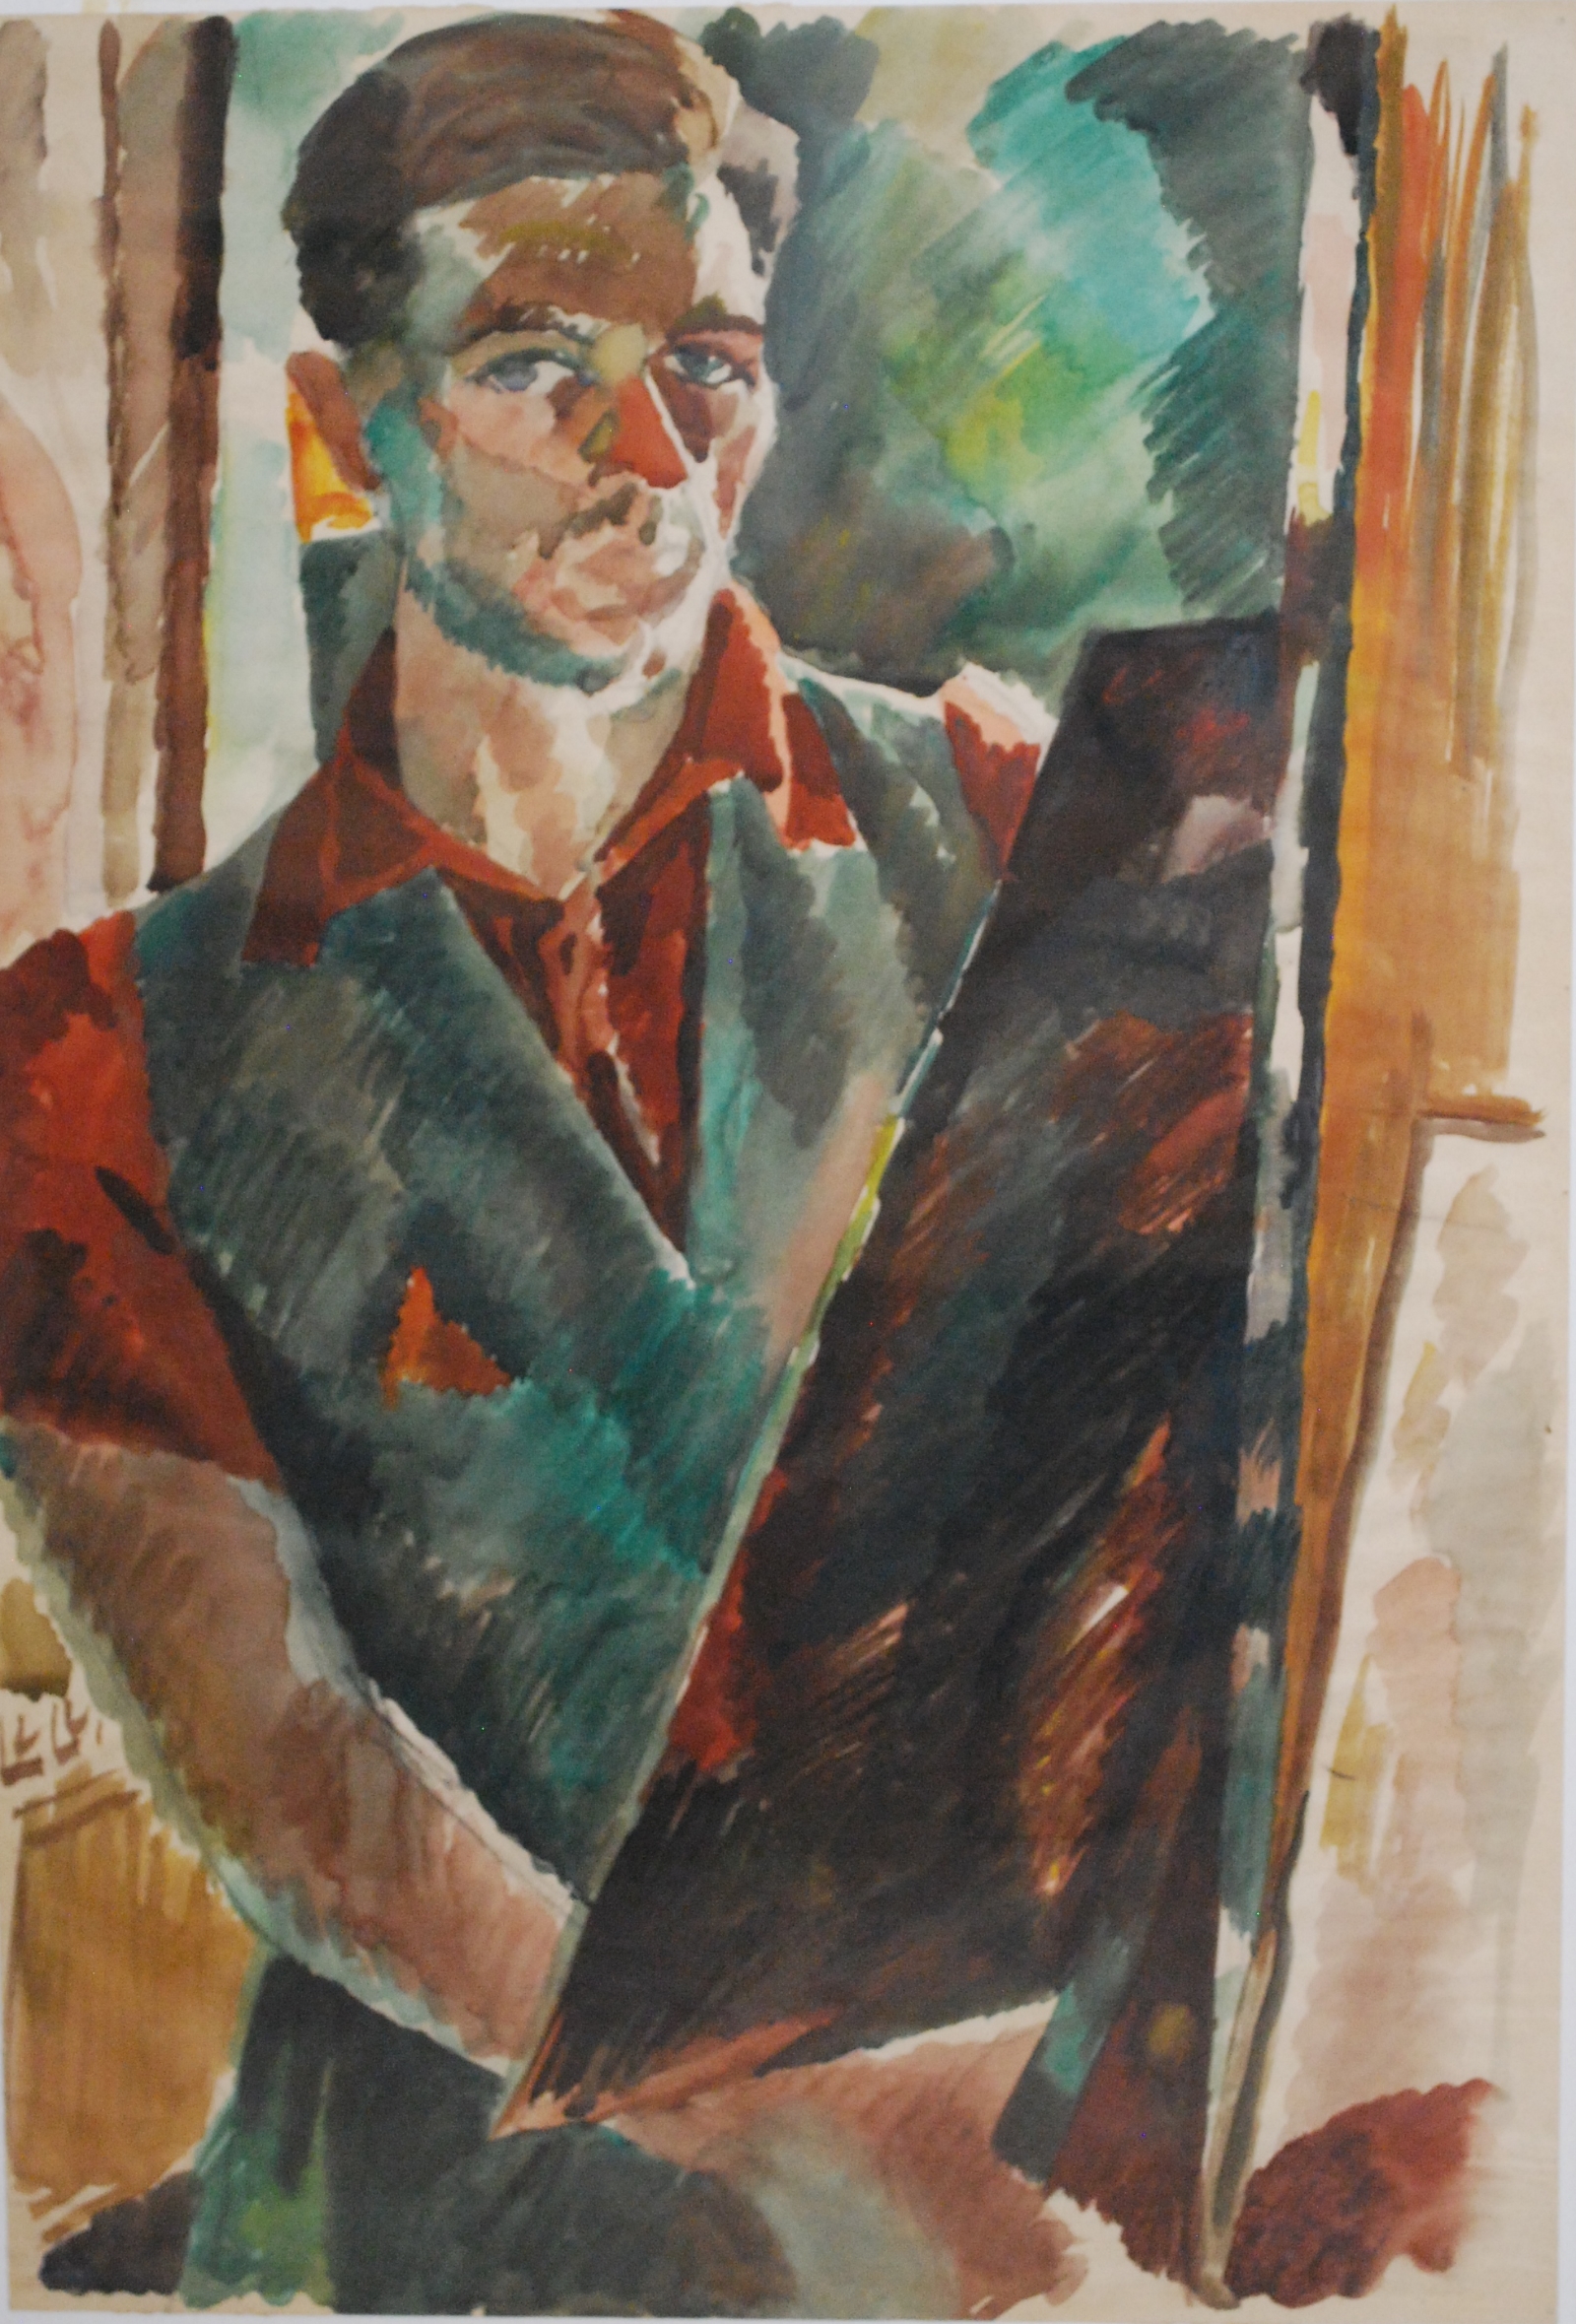  Kenneth Wood Self Portrait Watercolour 1937, 38 x 55cm 